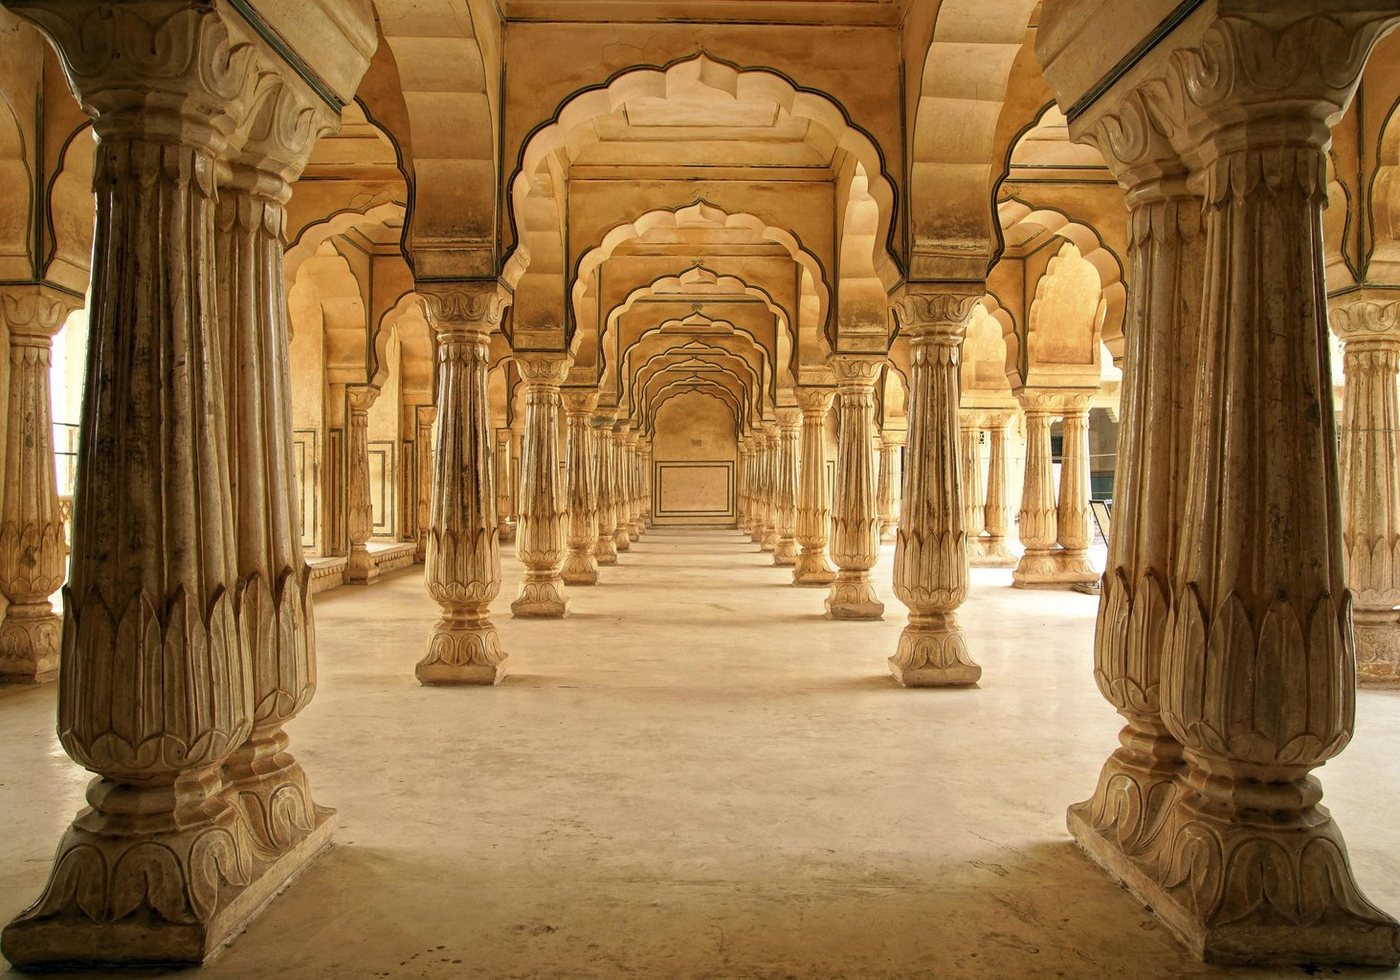 wandmotiv24 Fototapete Indien-Tempel,Jaipur, strukturiert, Wandtapete, Motivtapete, matt, Vinyltapete, selbstklebend von wandmotiv24